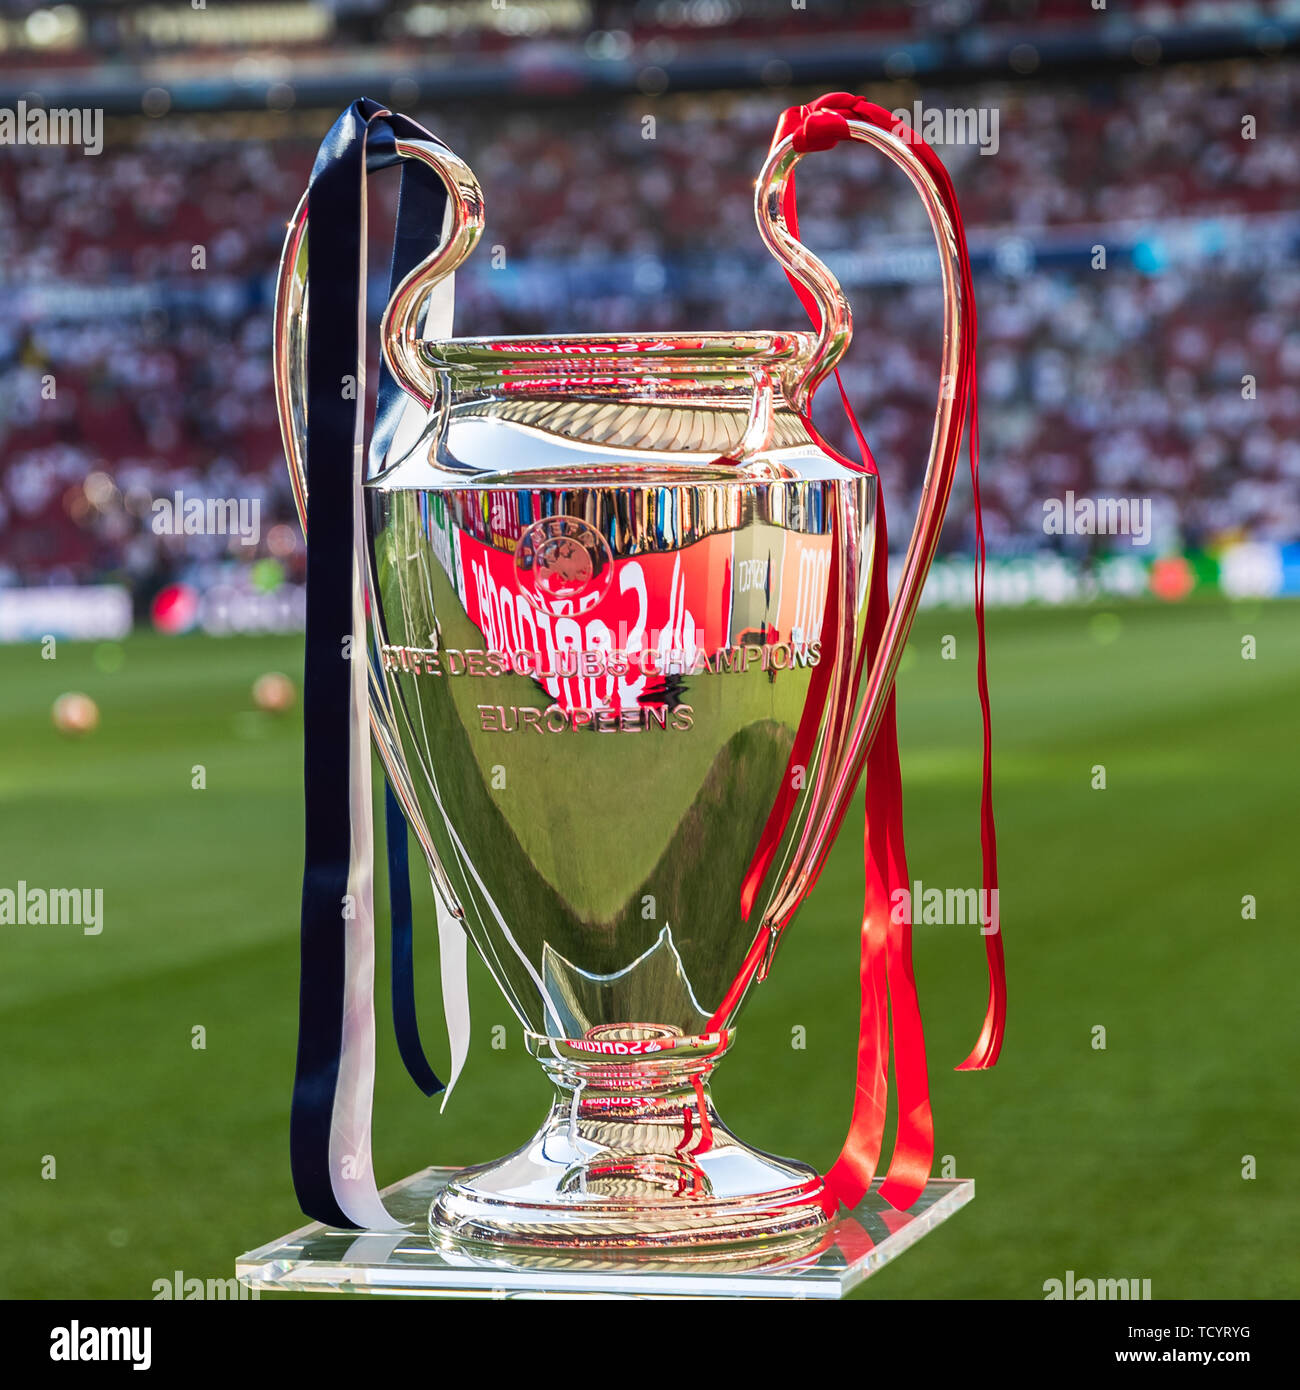 1 june 2019 Madrid, Spain Soccer Champions League Final: Tottenham Hotspur v Liverpool   Champions League Cup 2018-2019, Europacup 1 Beker, Beker met de grote oren Stock Photo